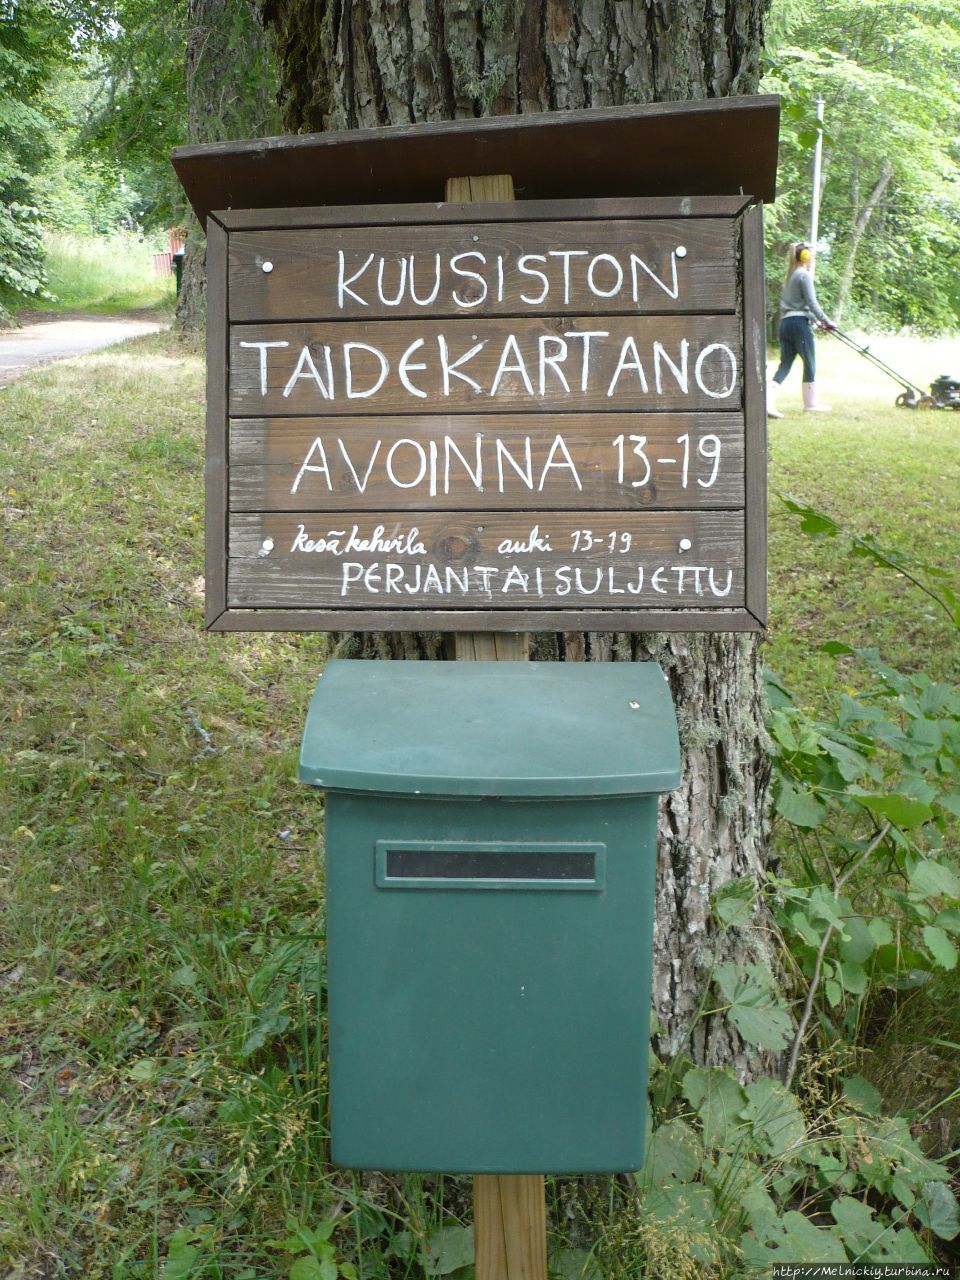 Усадьба коменданта Турку Куусисто, Финляндия